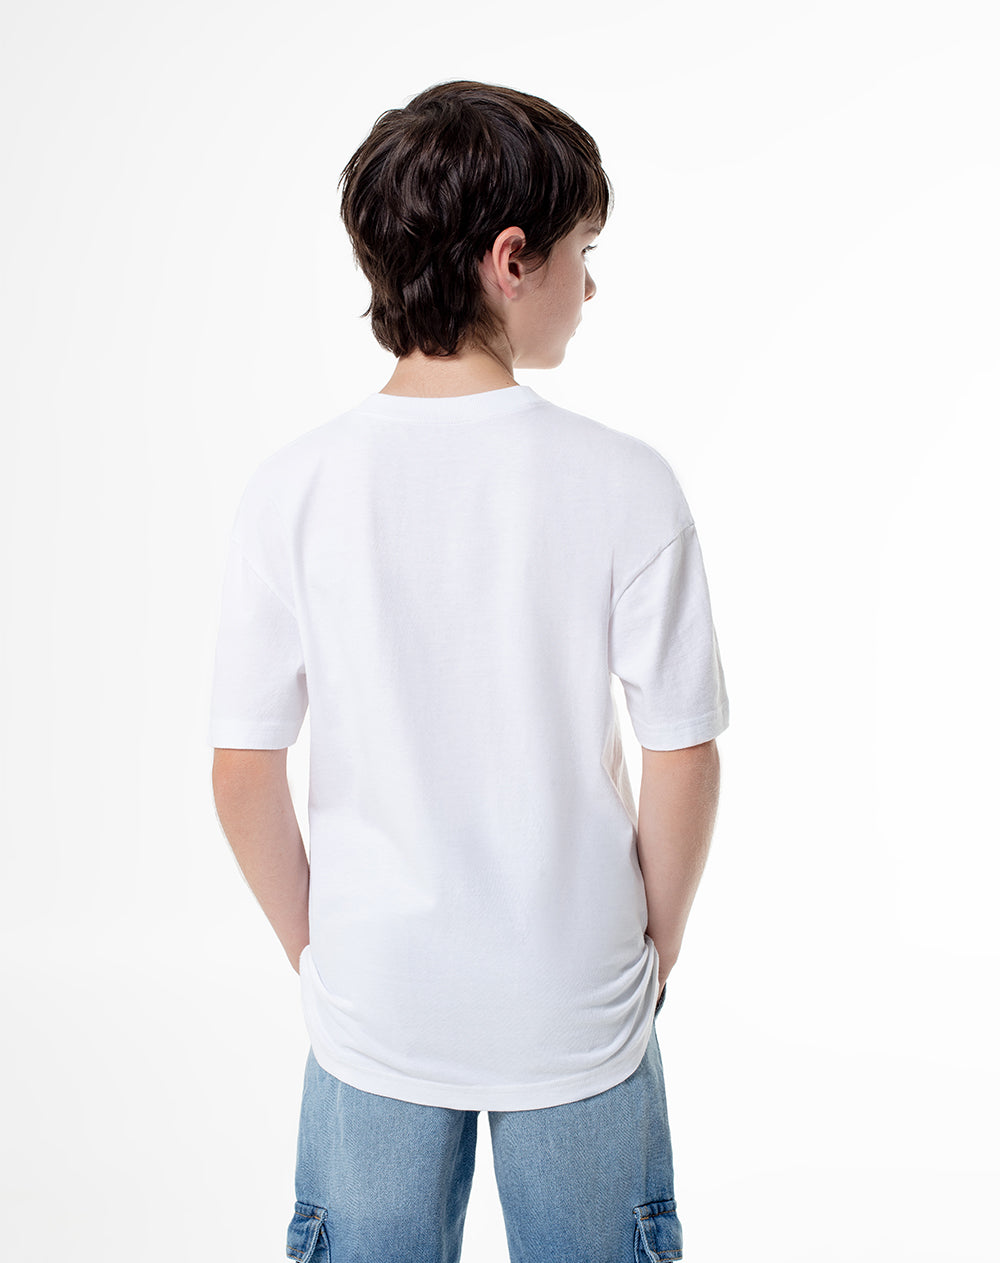 Camiseta fit manga corta blanca